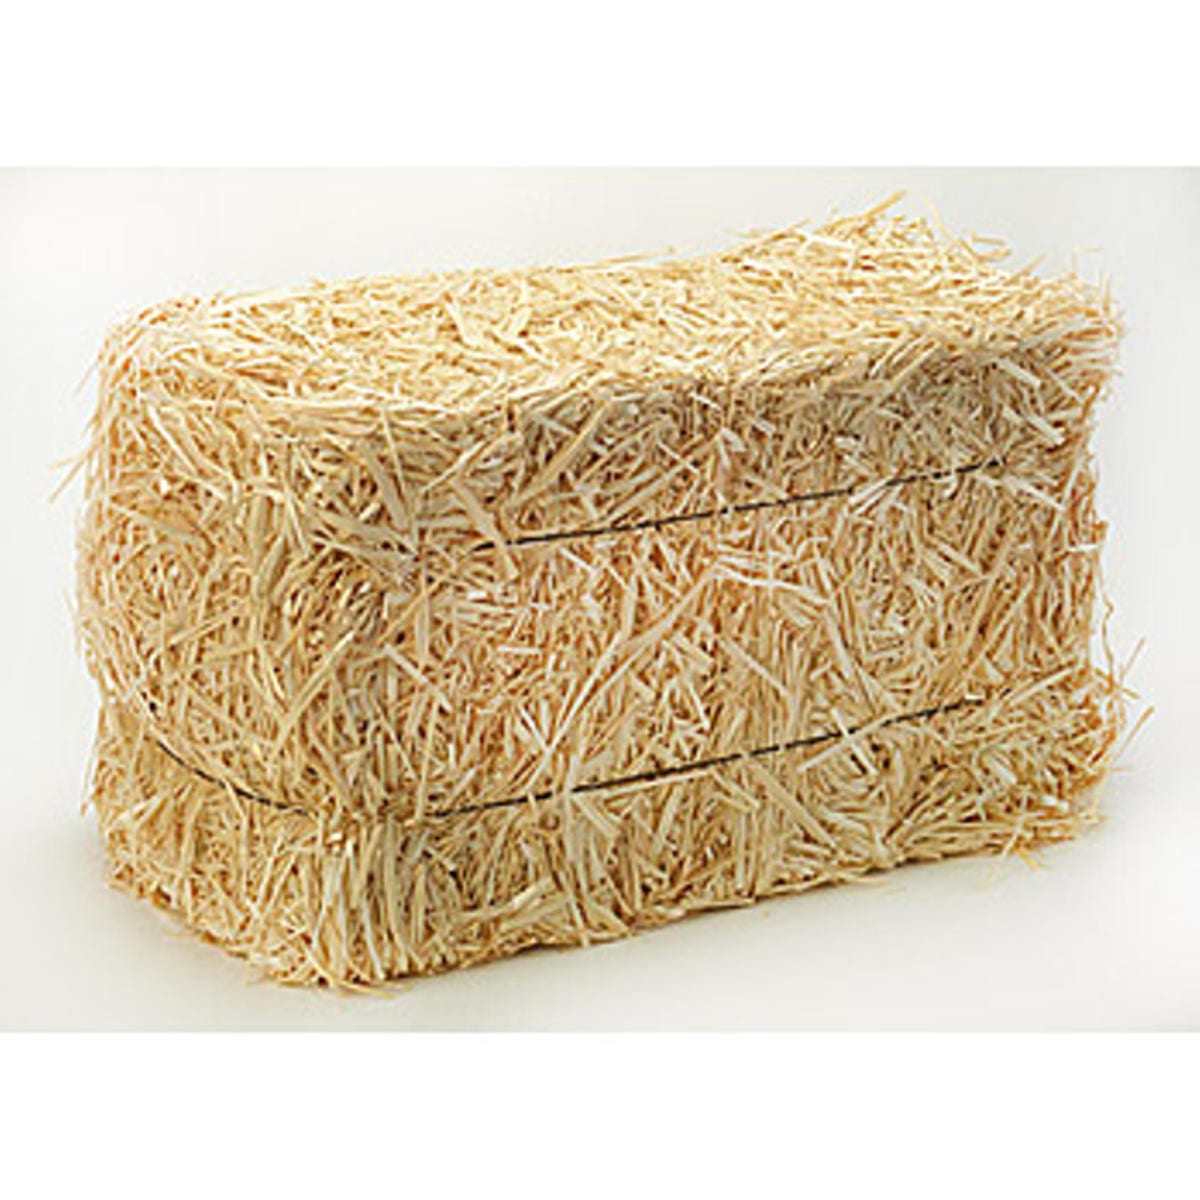 Hay Bale - Straw Bale Prop